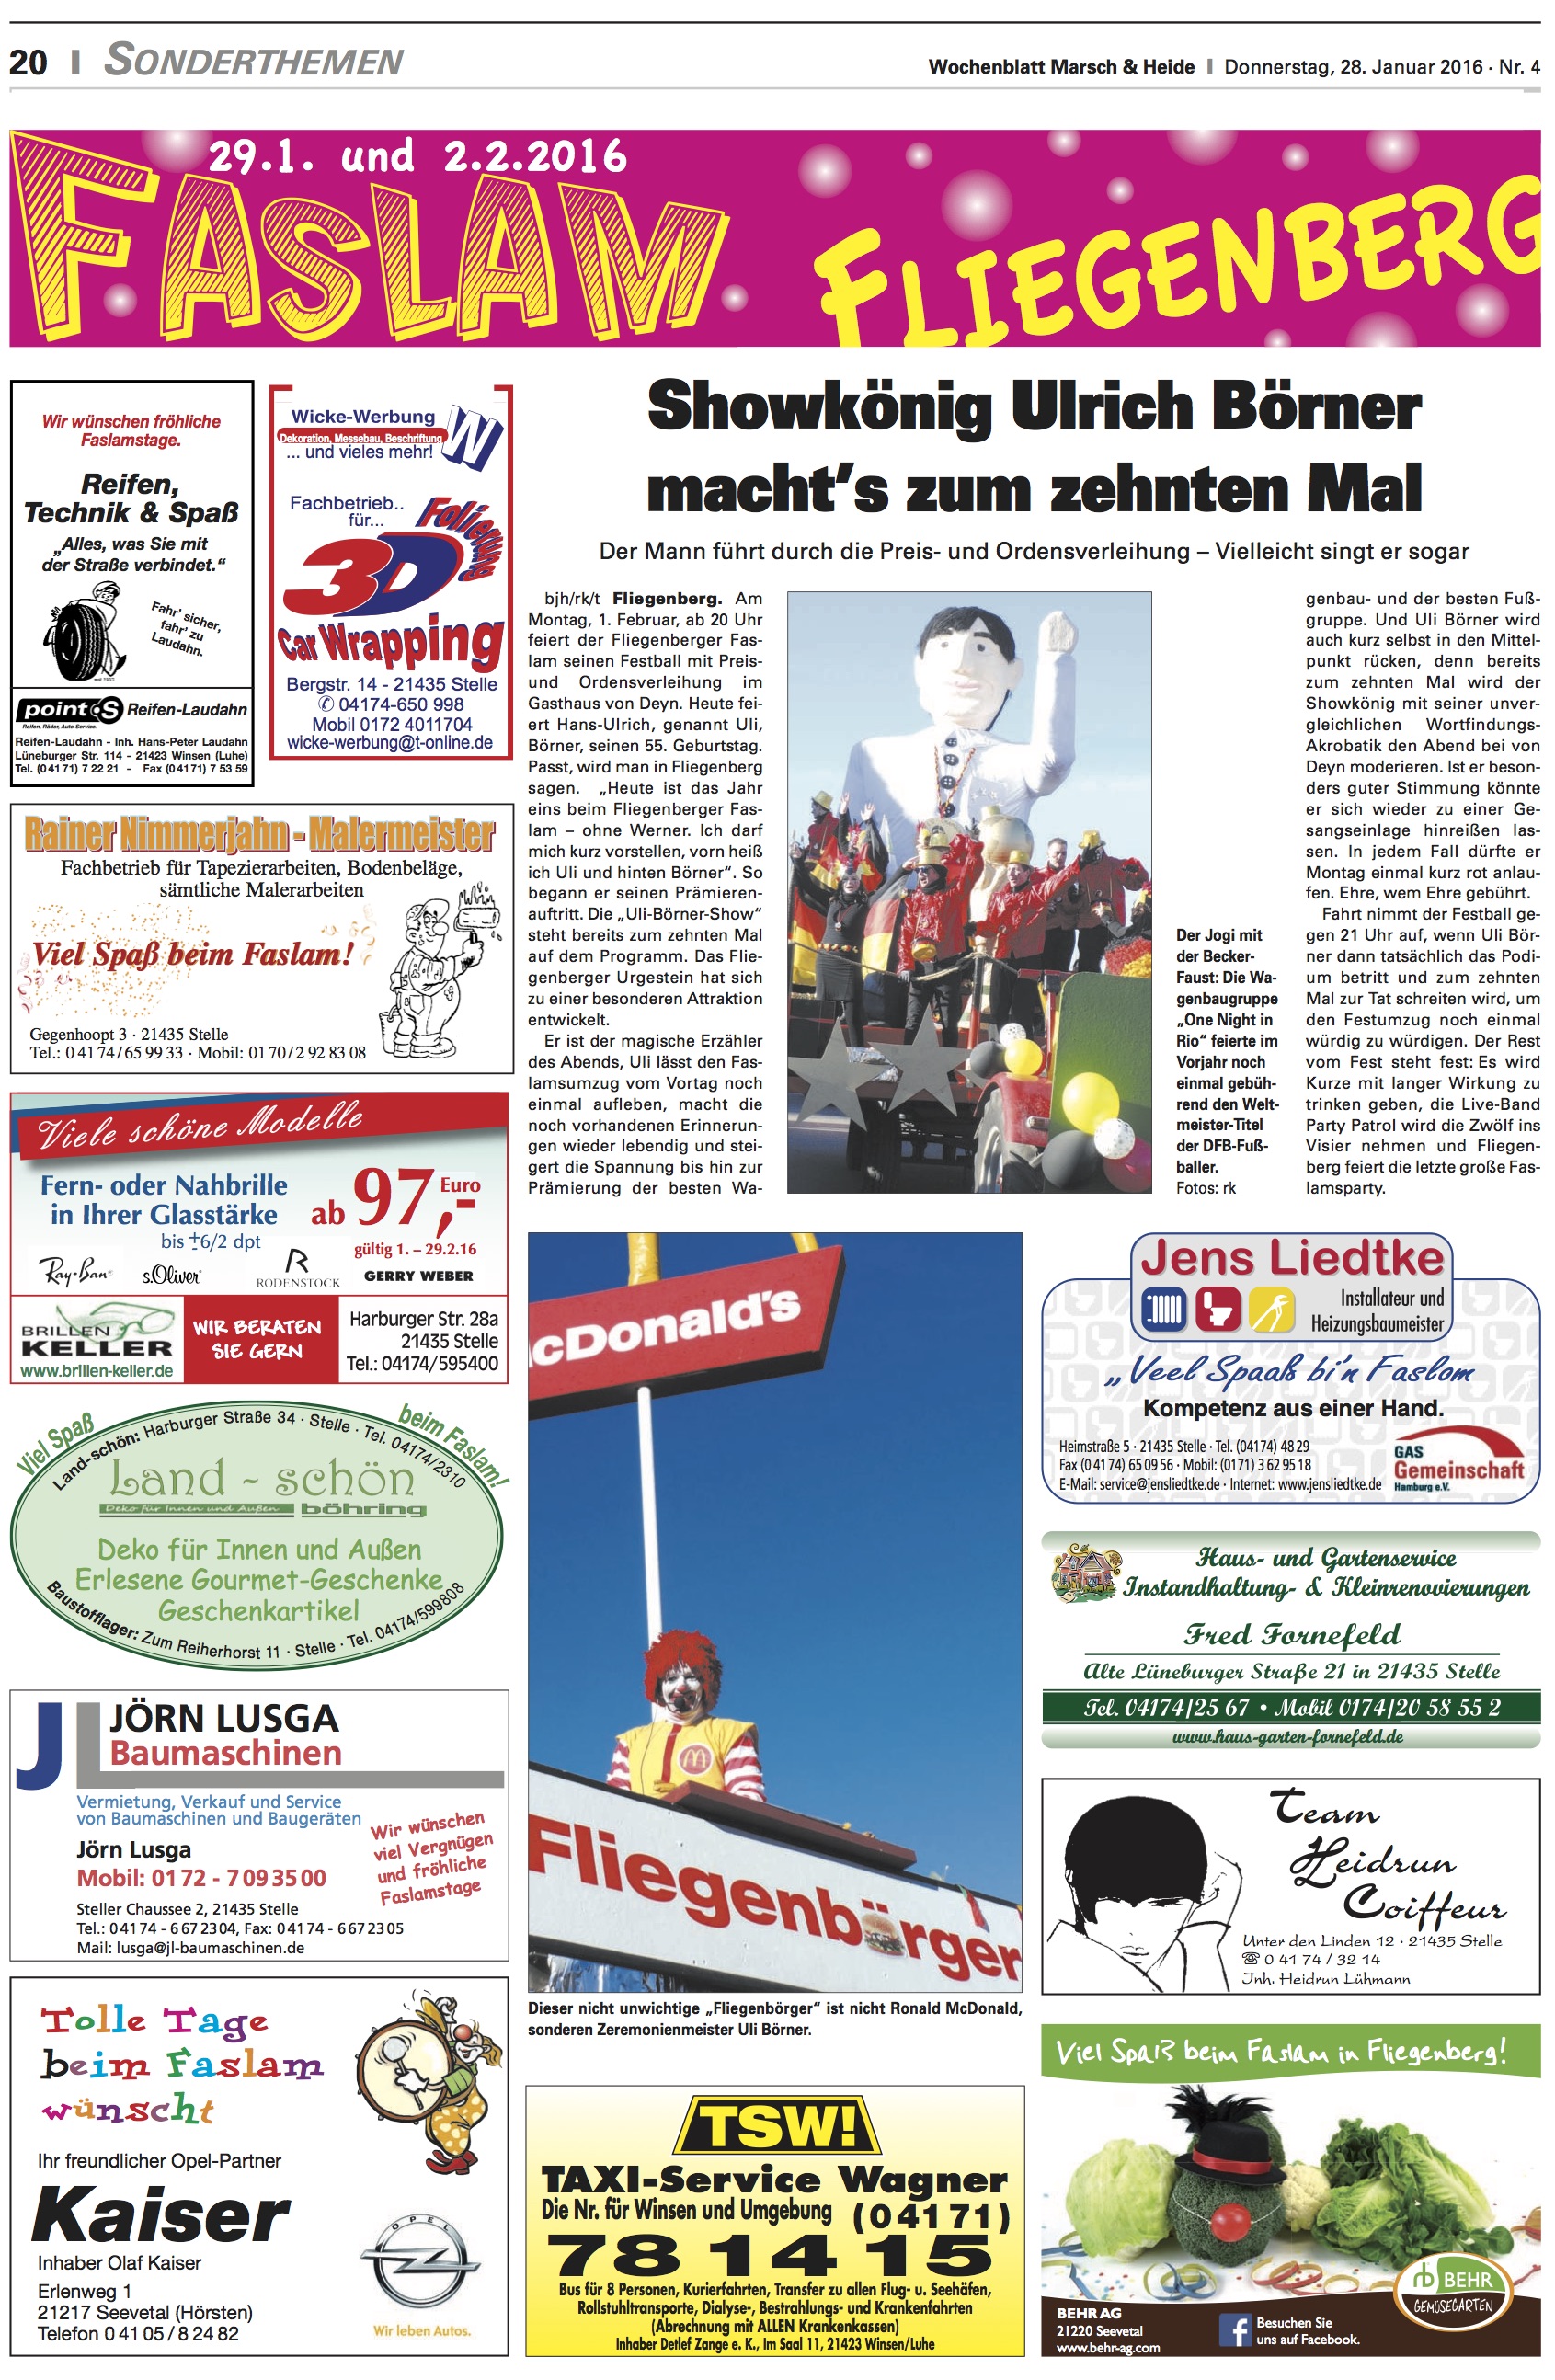 Wochenblatt Marsch & Heide - 28.01.2016